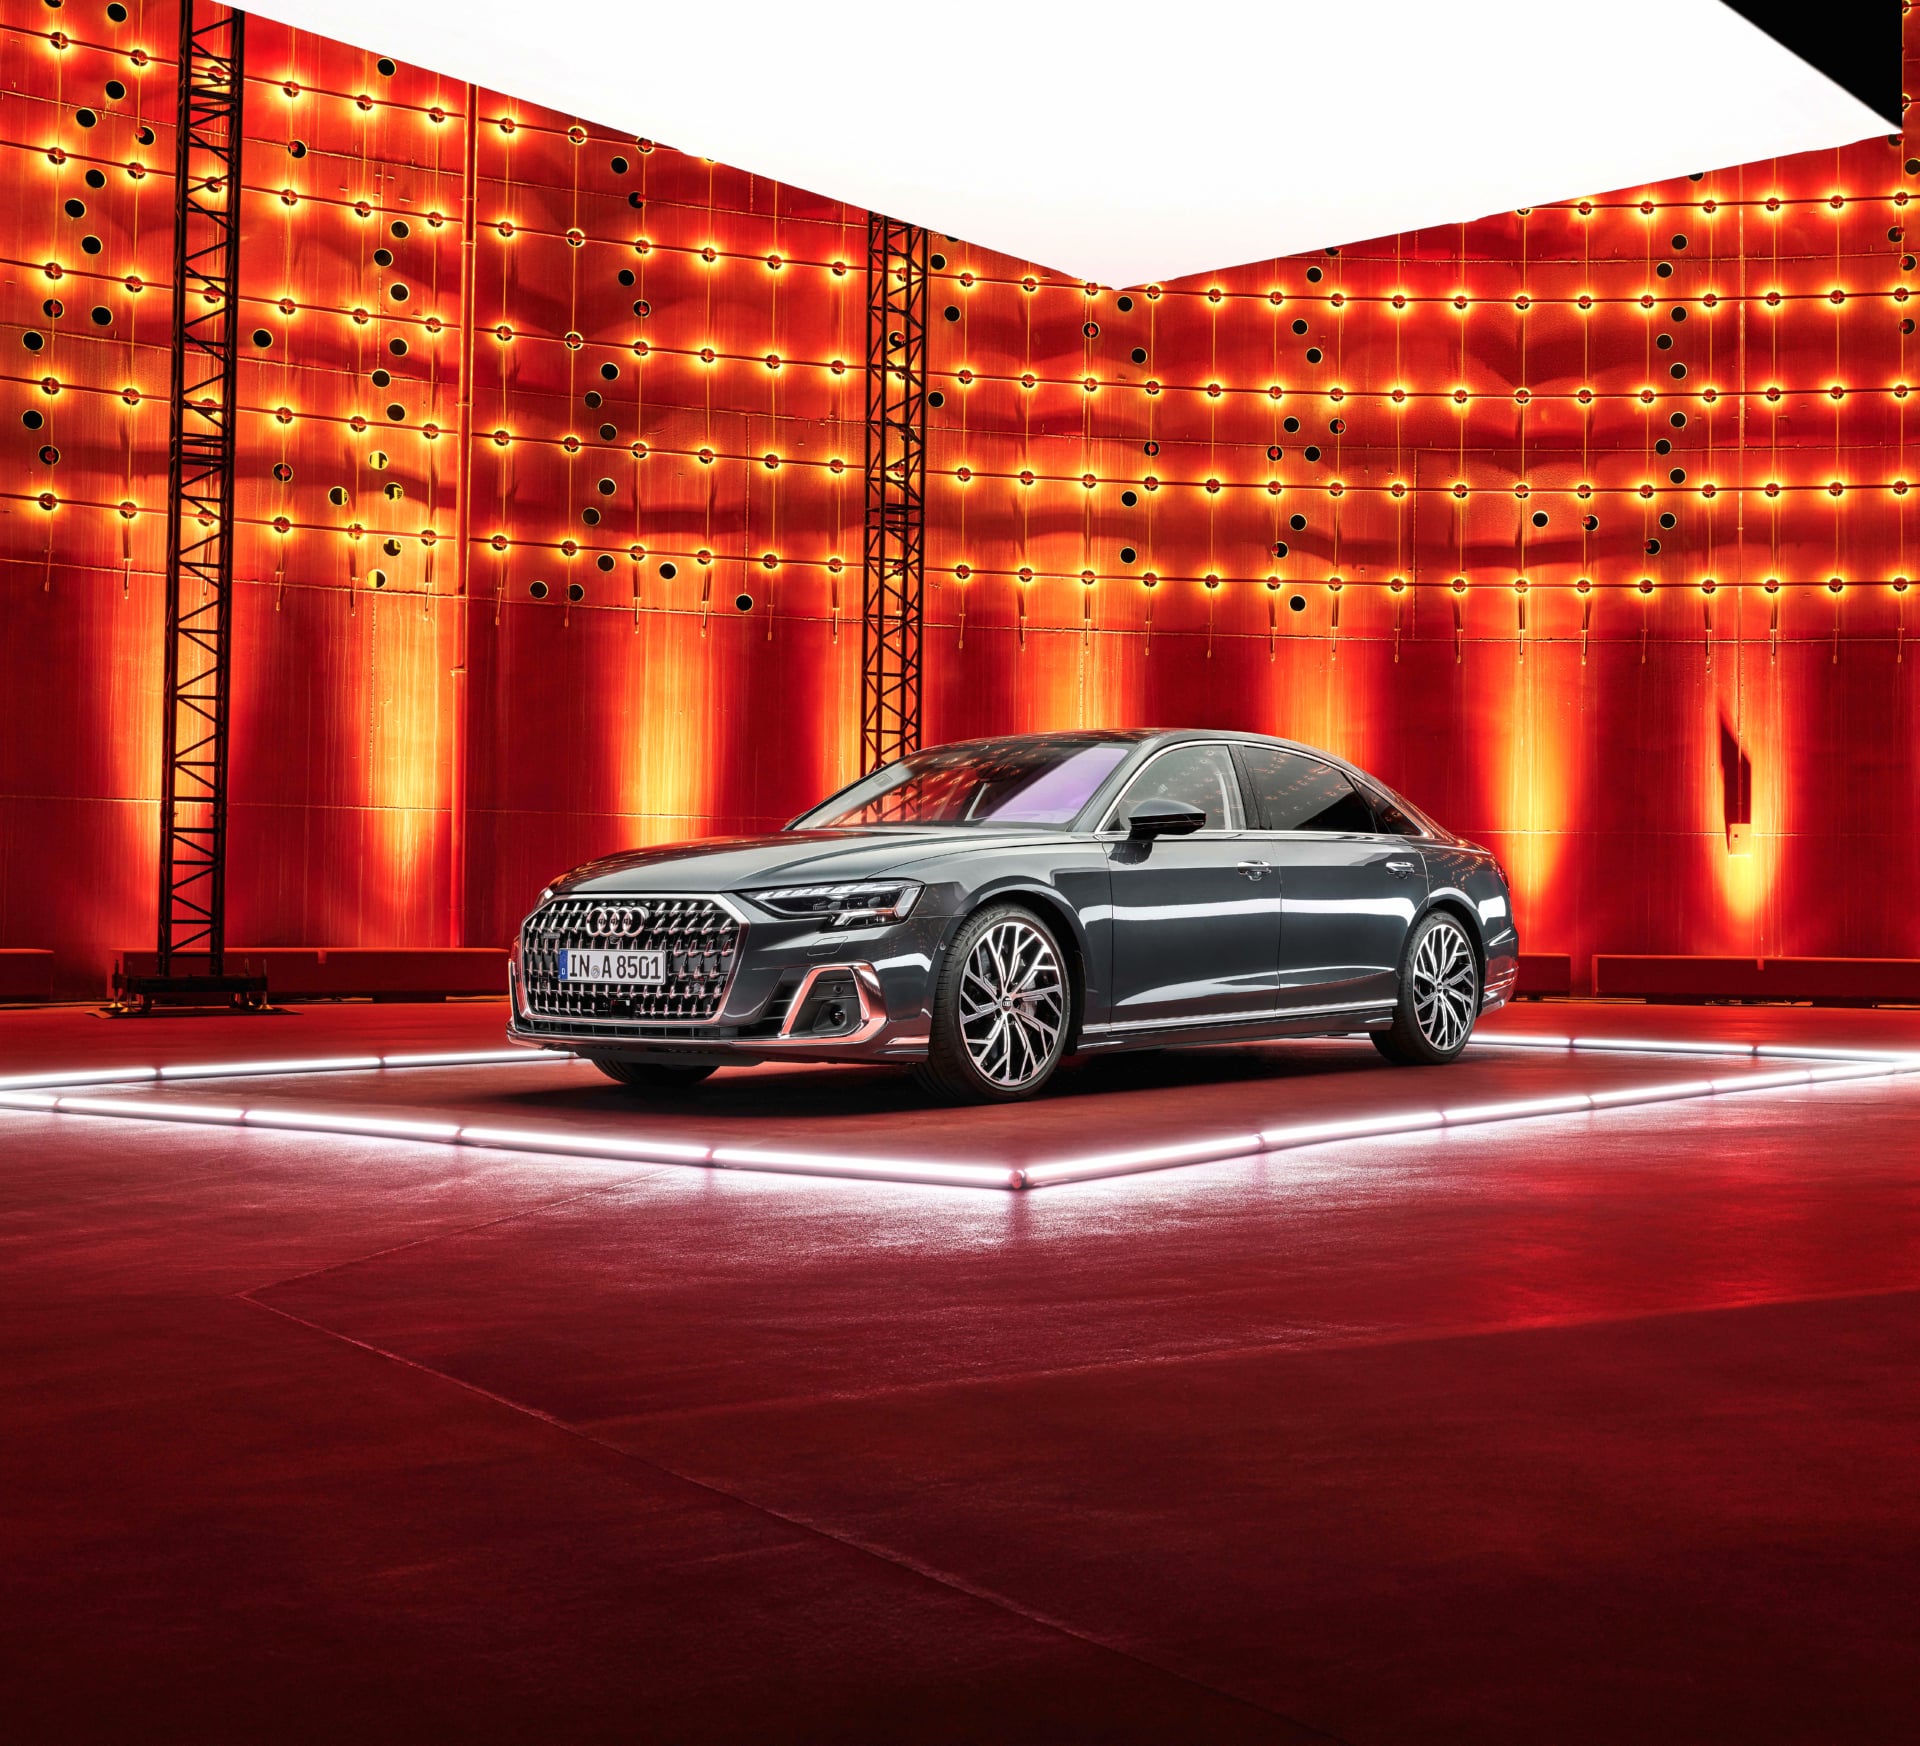 Audi A8 L 60 TFSI quattro at 1600 x 1200 size wallpapers HD quality